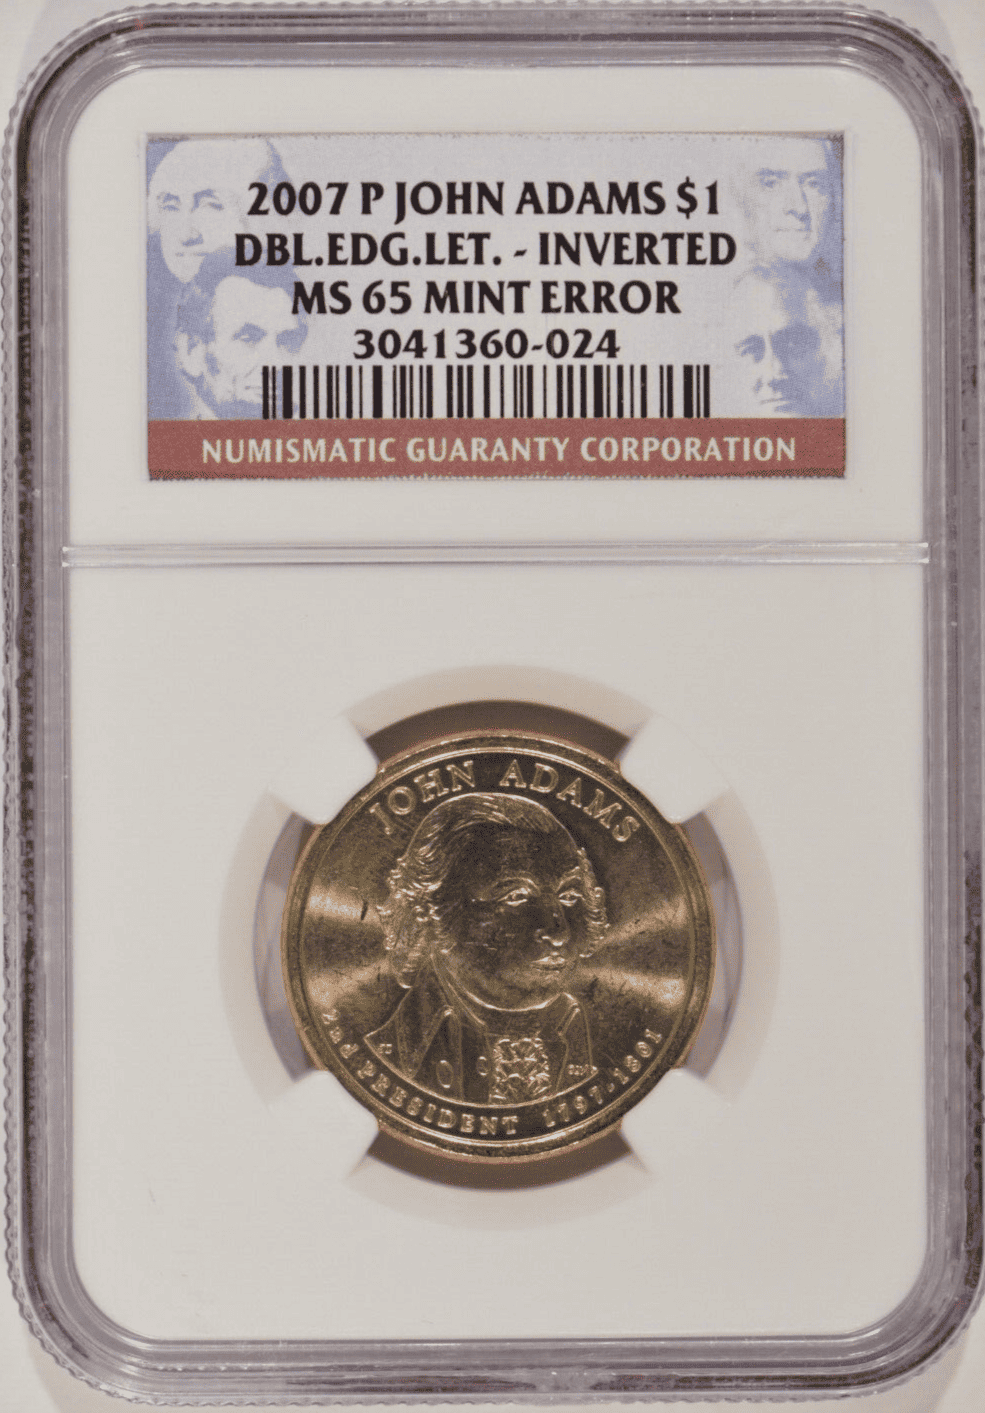 1797 to 1801 John Adams Dollar Coin Double Edge Lettering Inverted Error